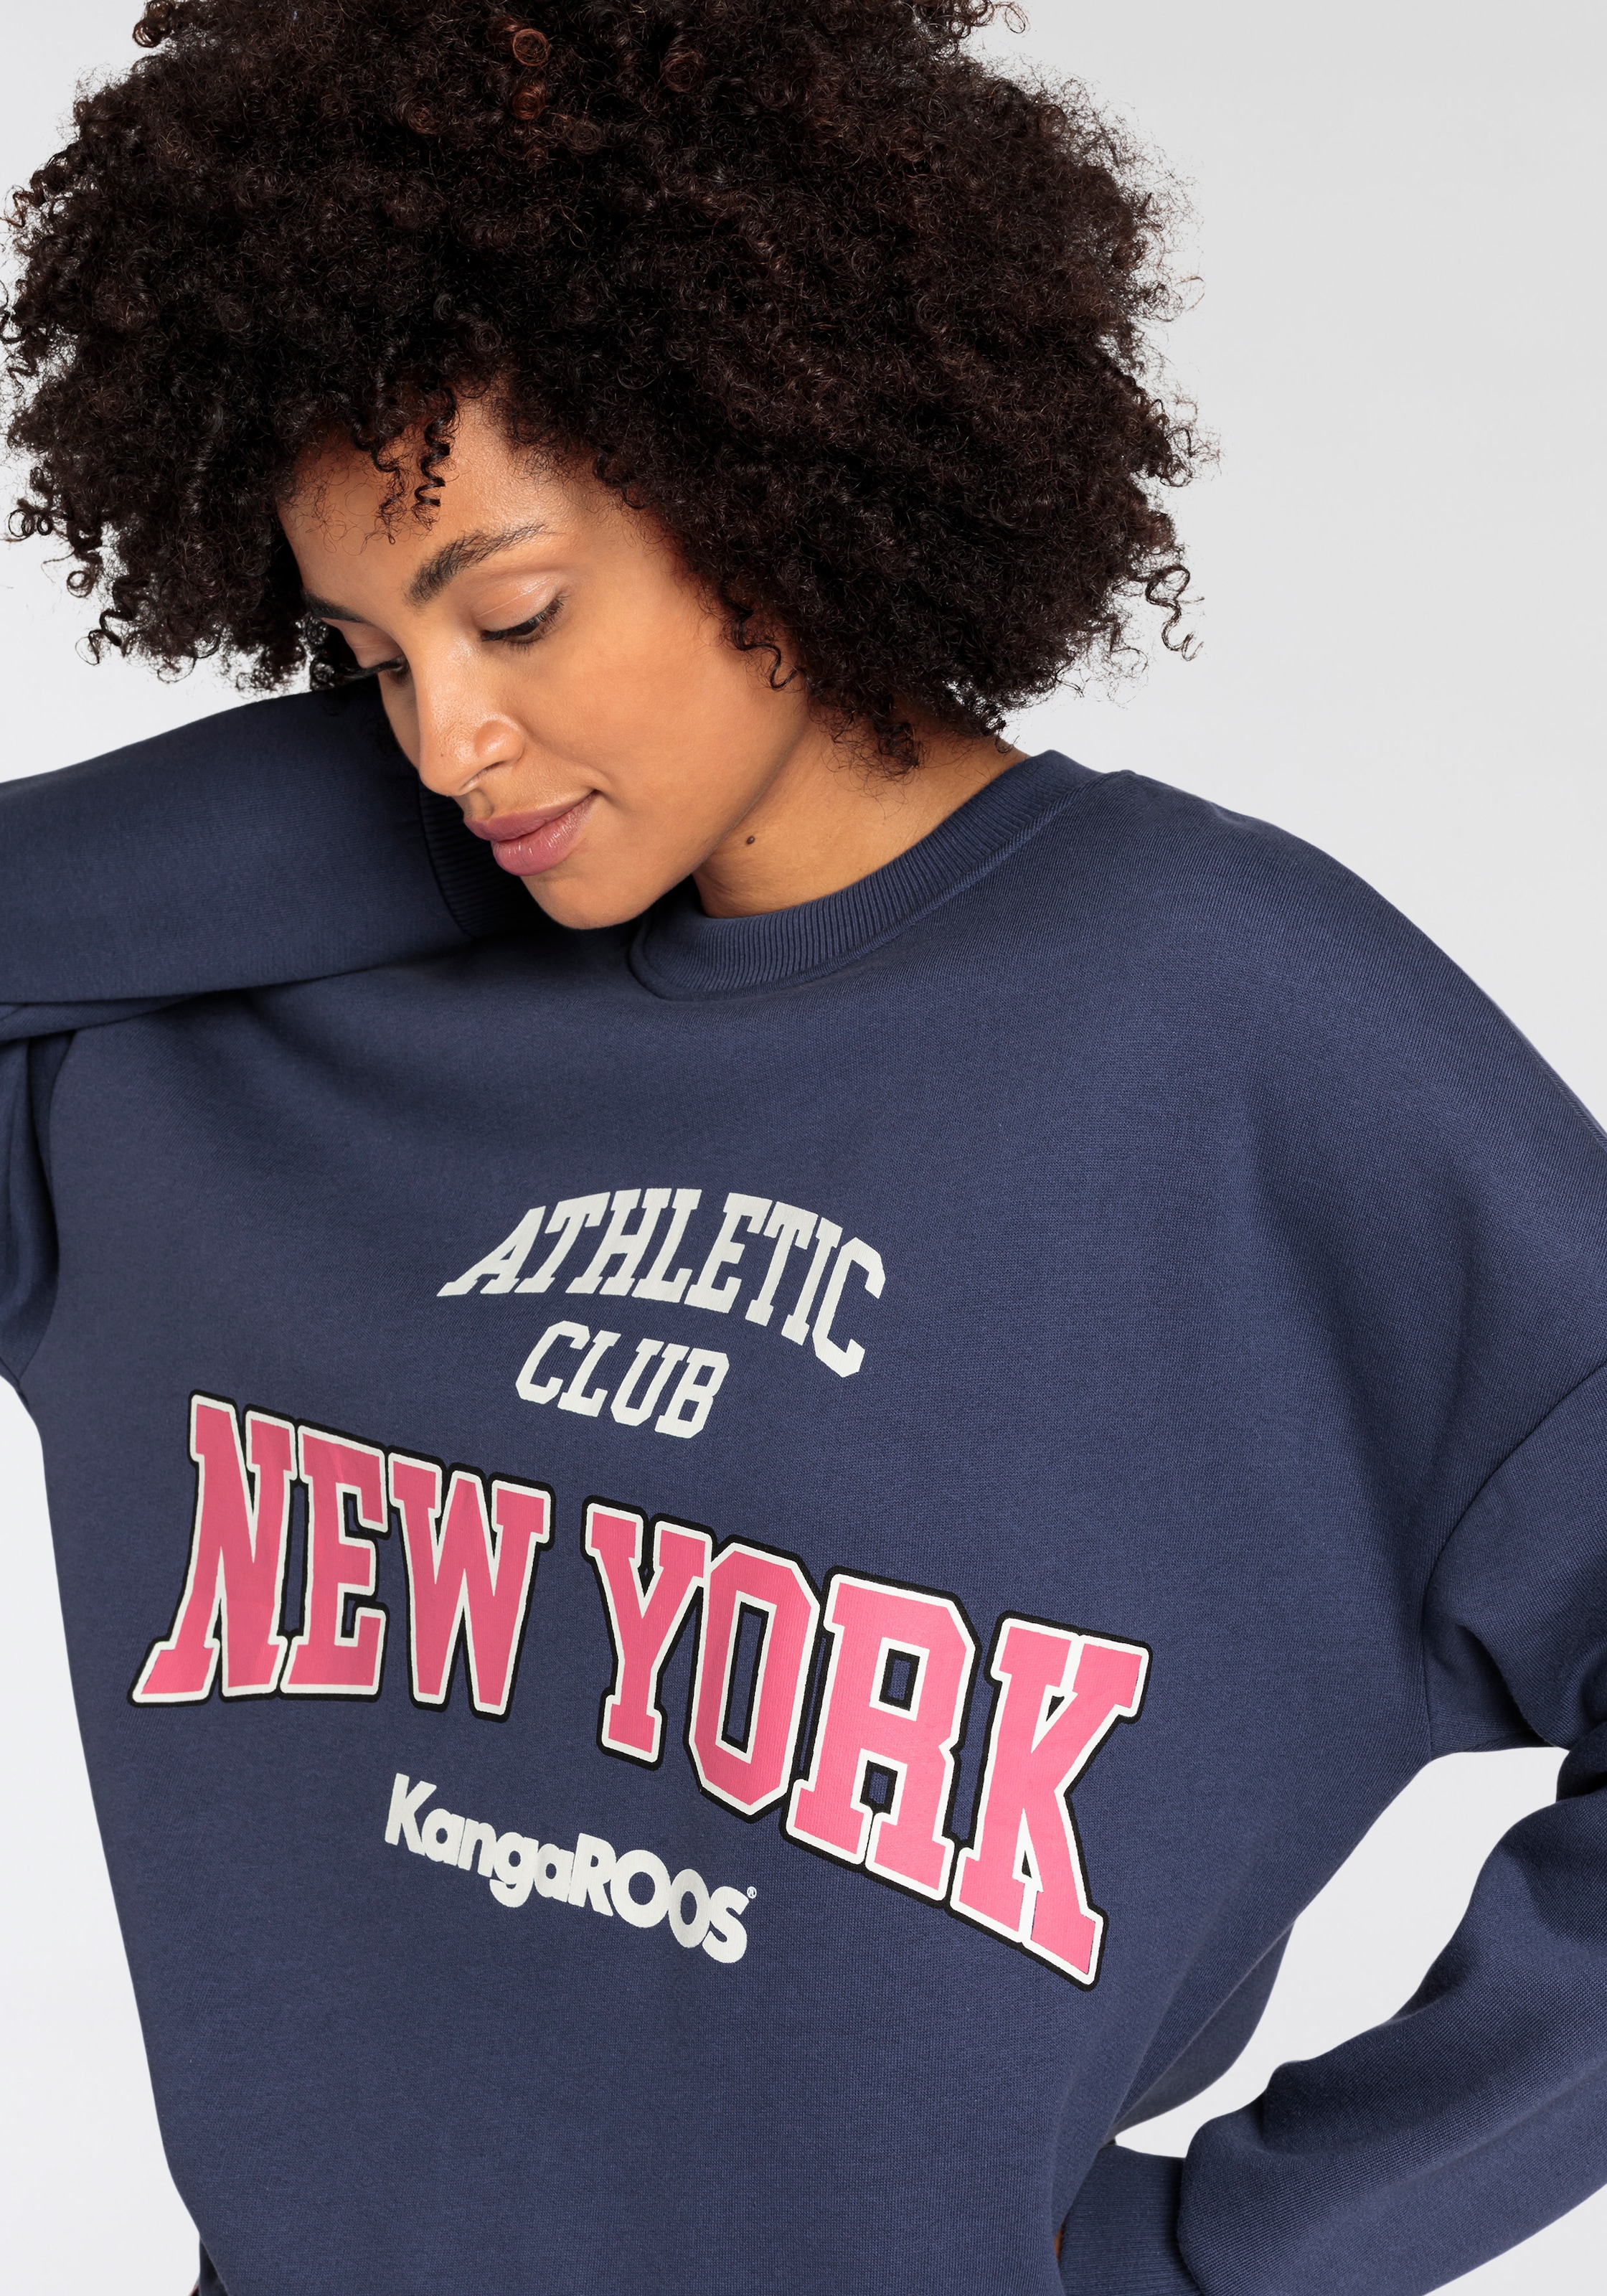 KangaROOS Sweatshirt, mit großem Logodruck im College-Style